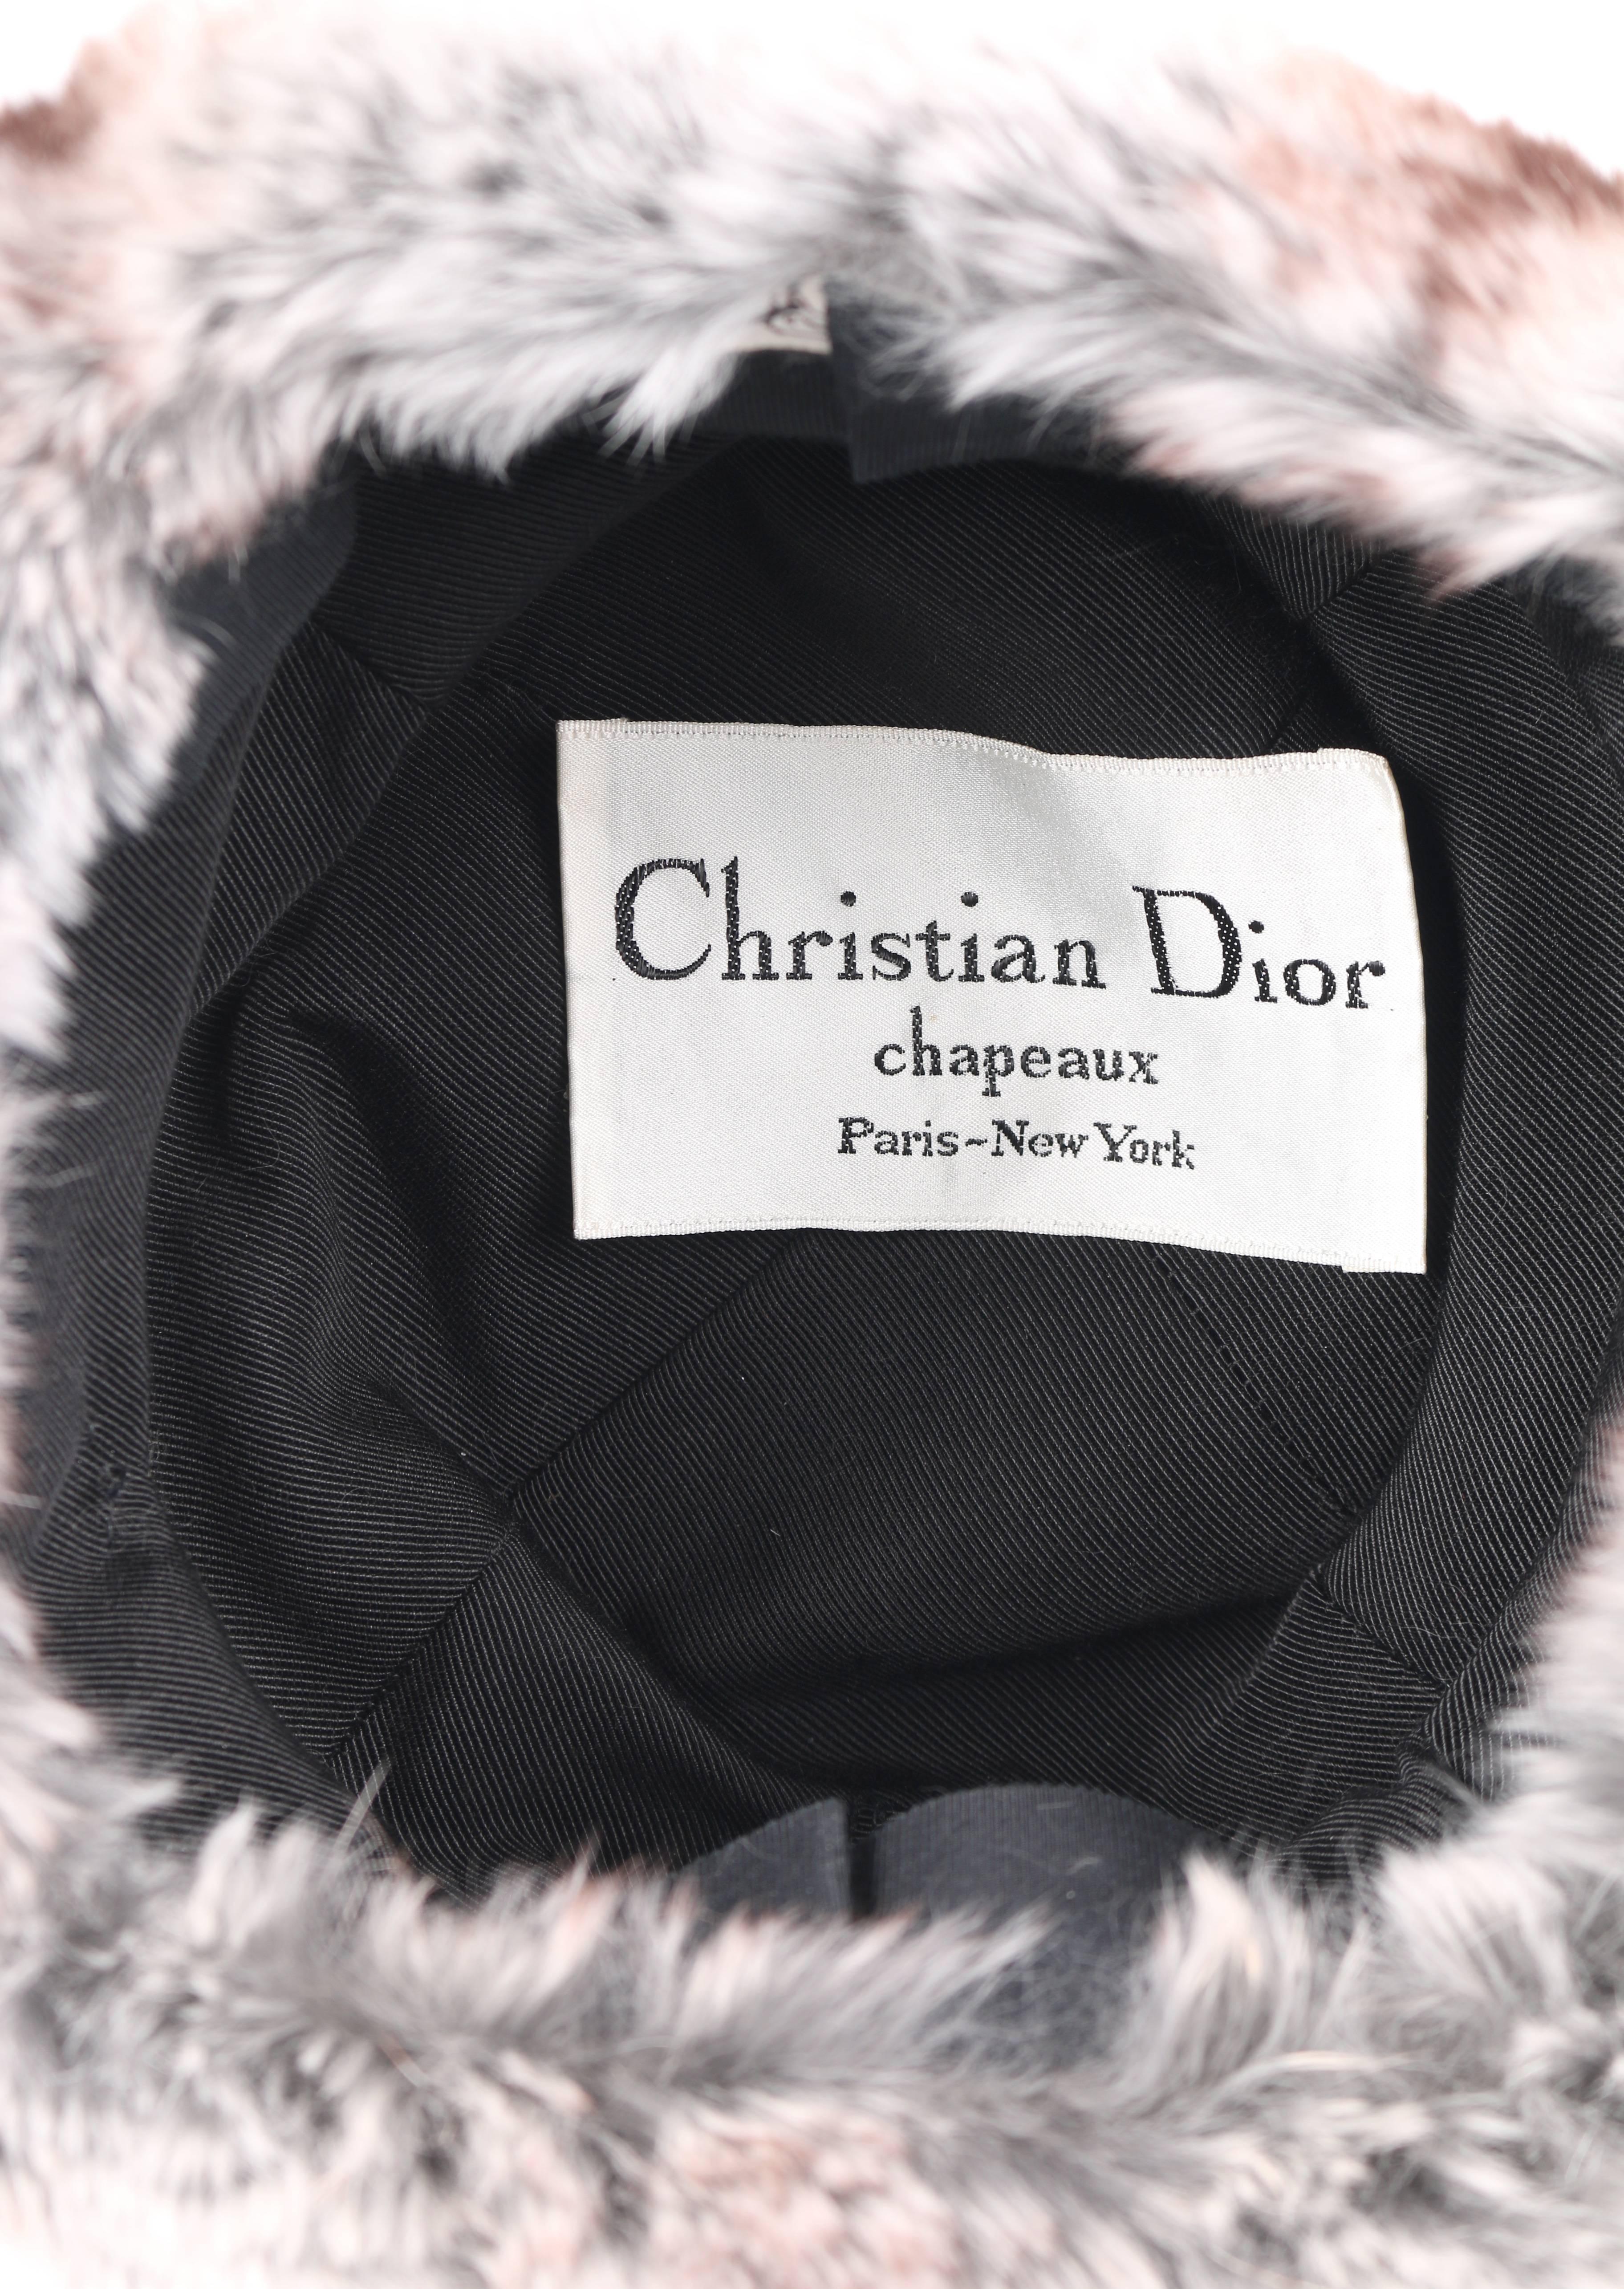 CHRISTIAN DIOR Chapeaux c.1960's MARC BOHAN Chinchilla Fur Tiered Cossack Hat 1